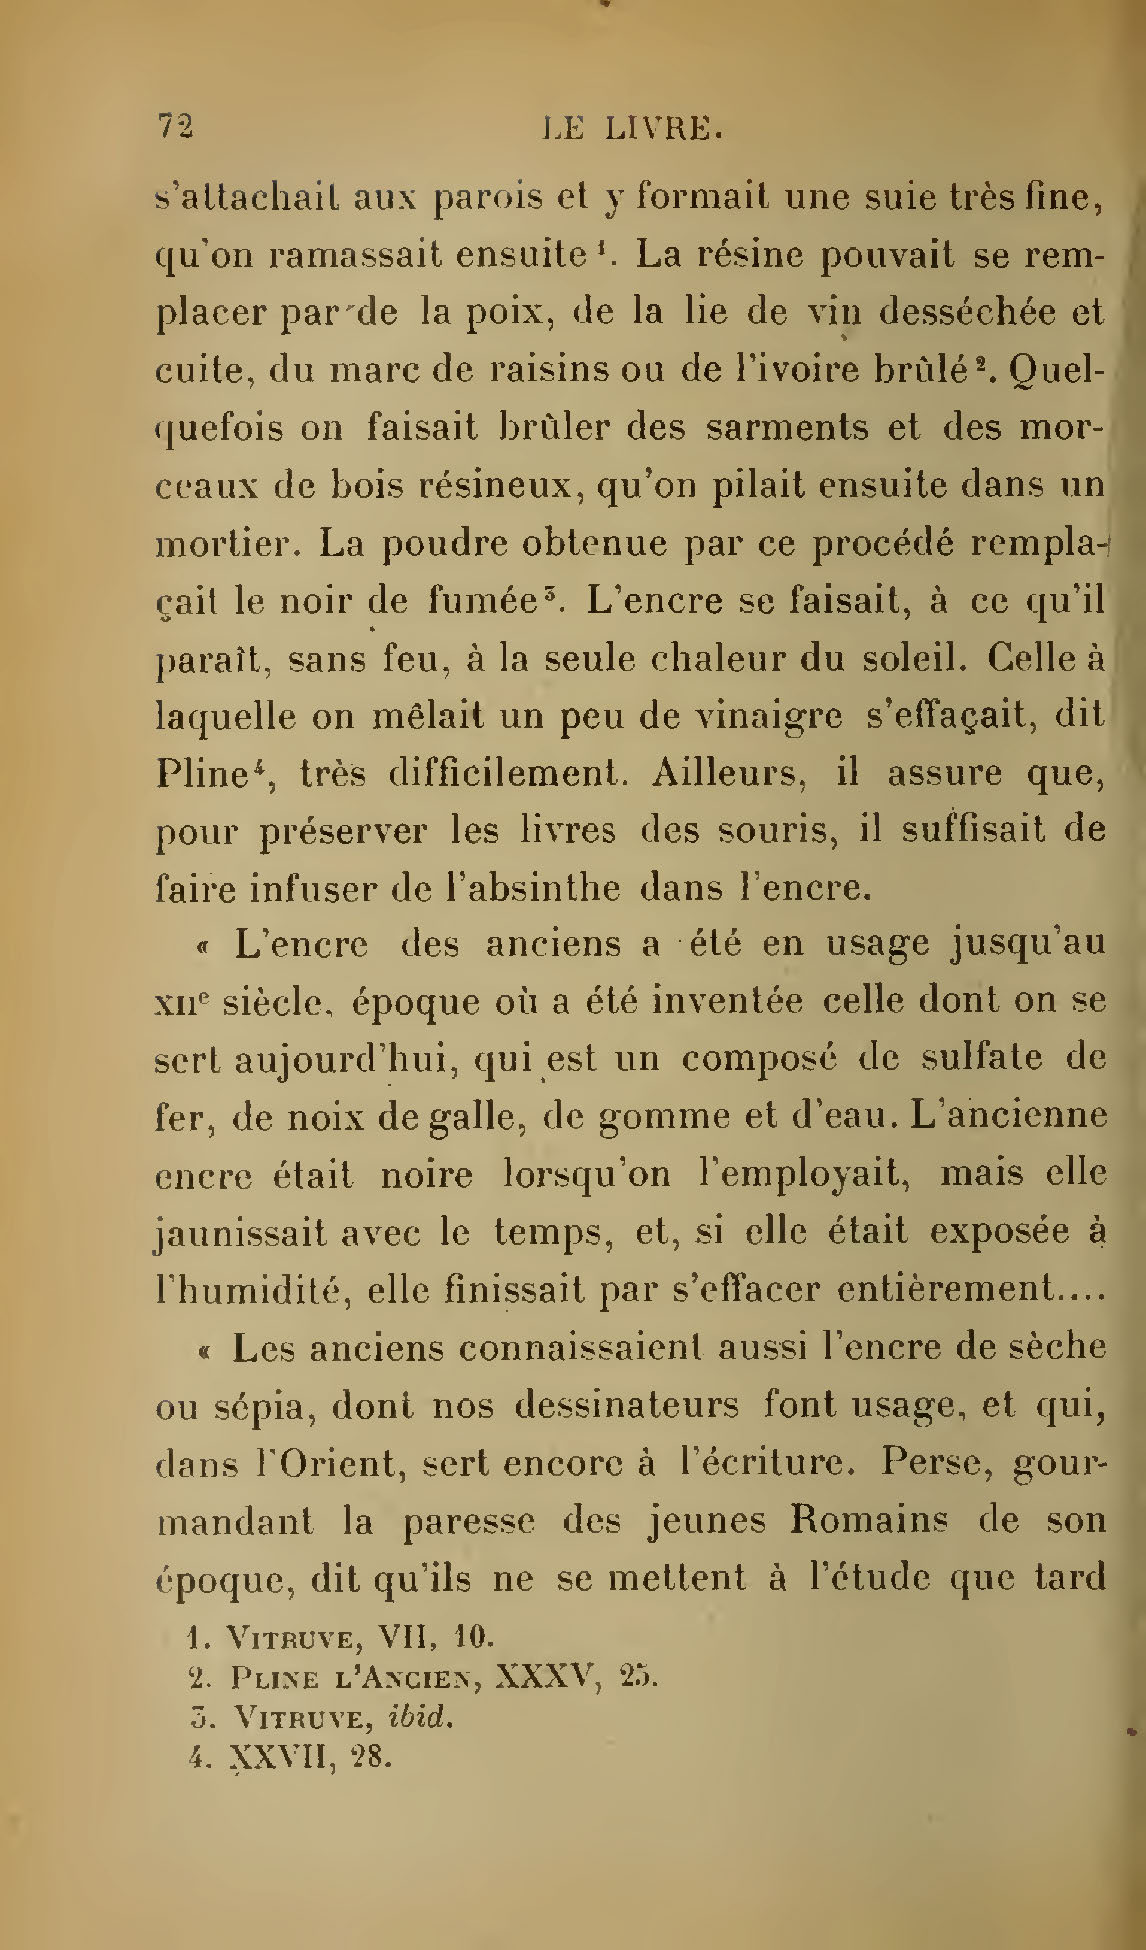 Albert Cim, Le Livre, t. I, p. 72.